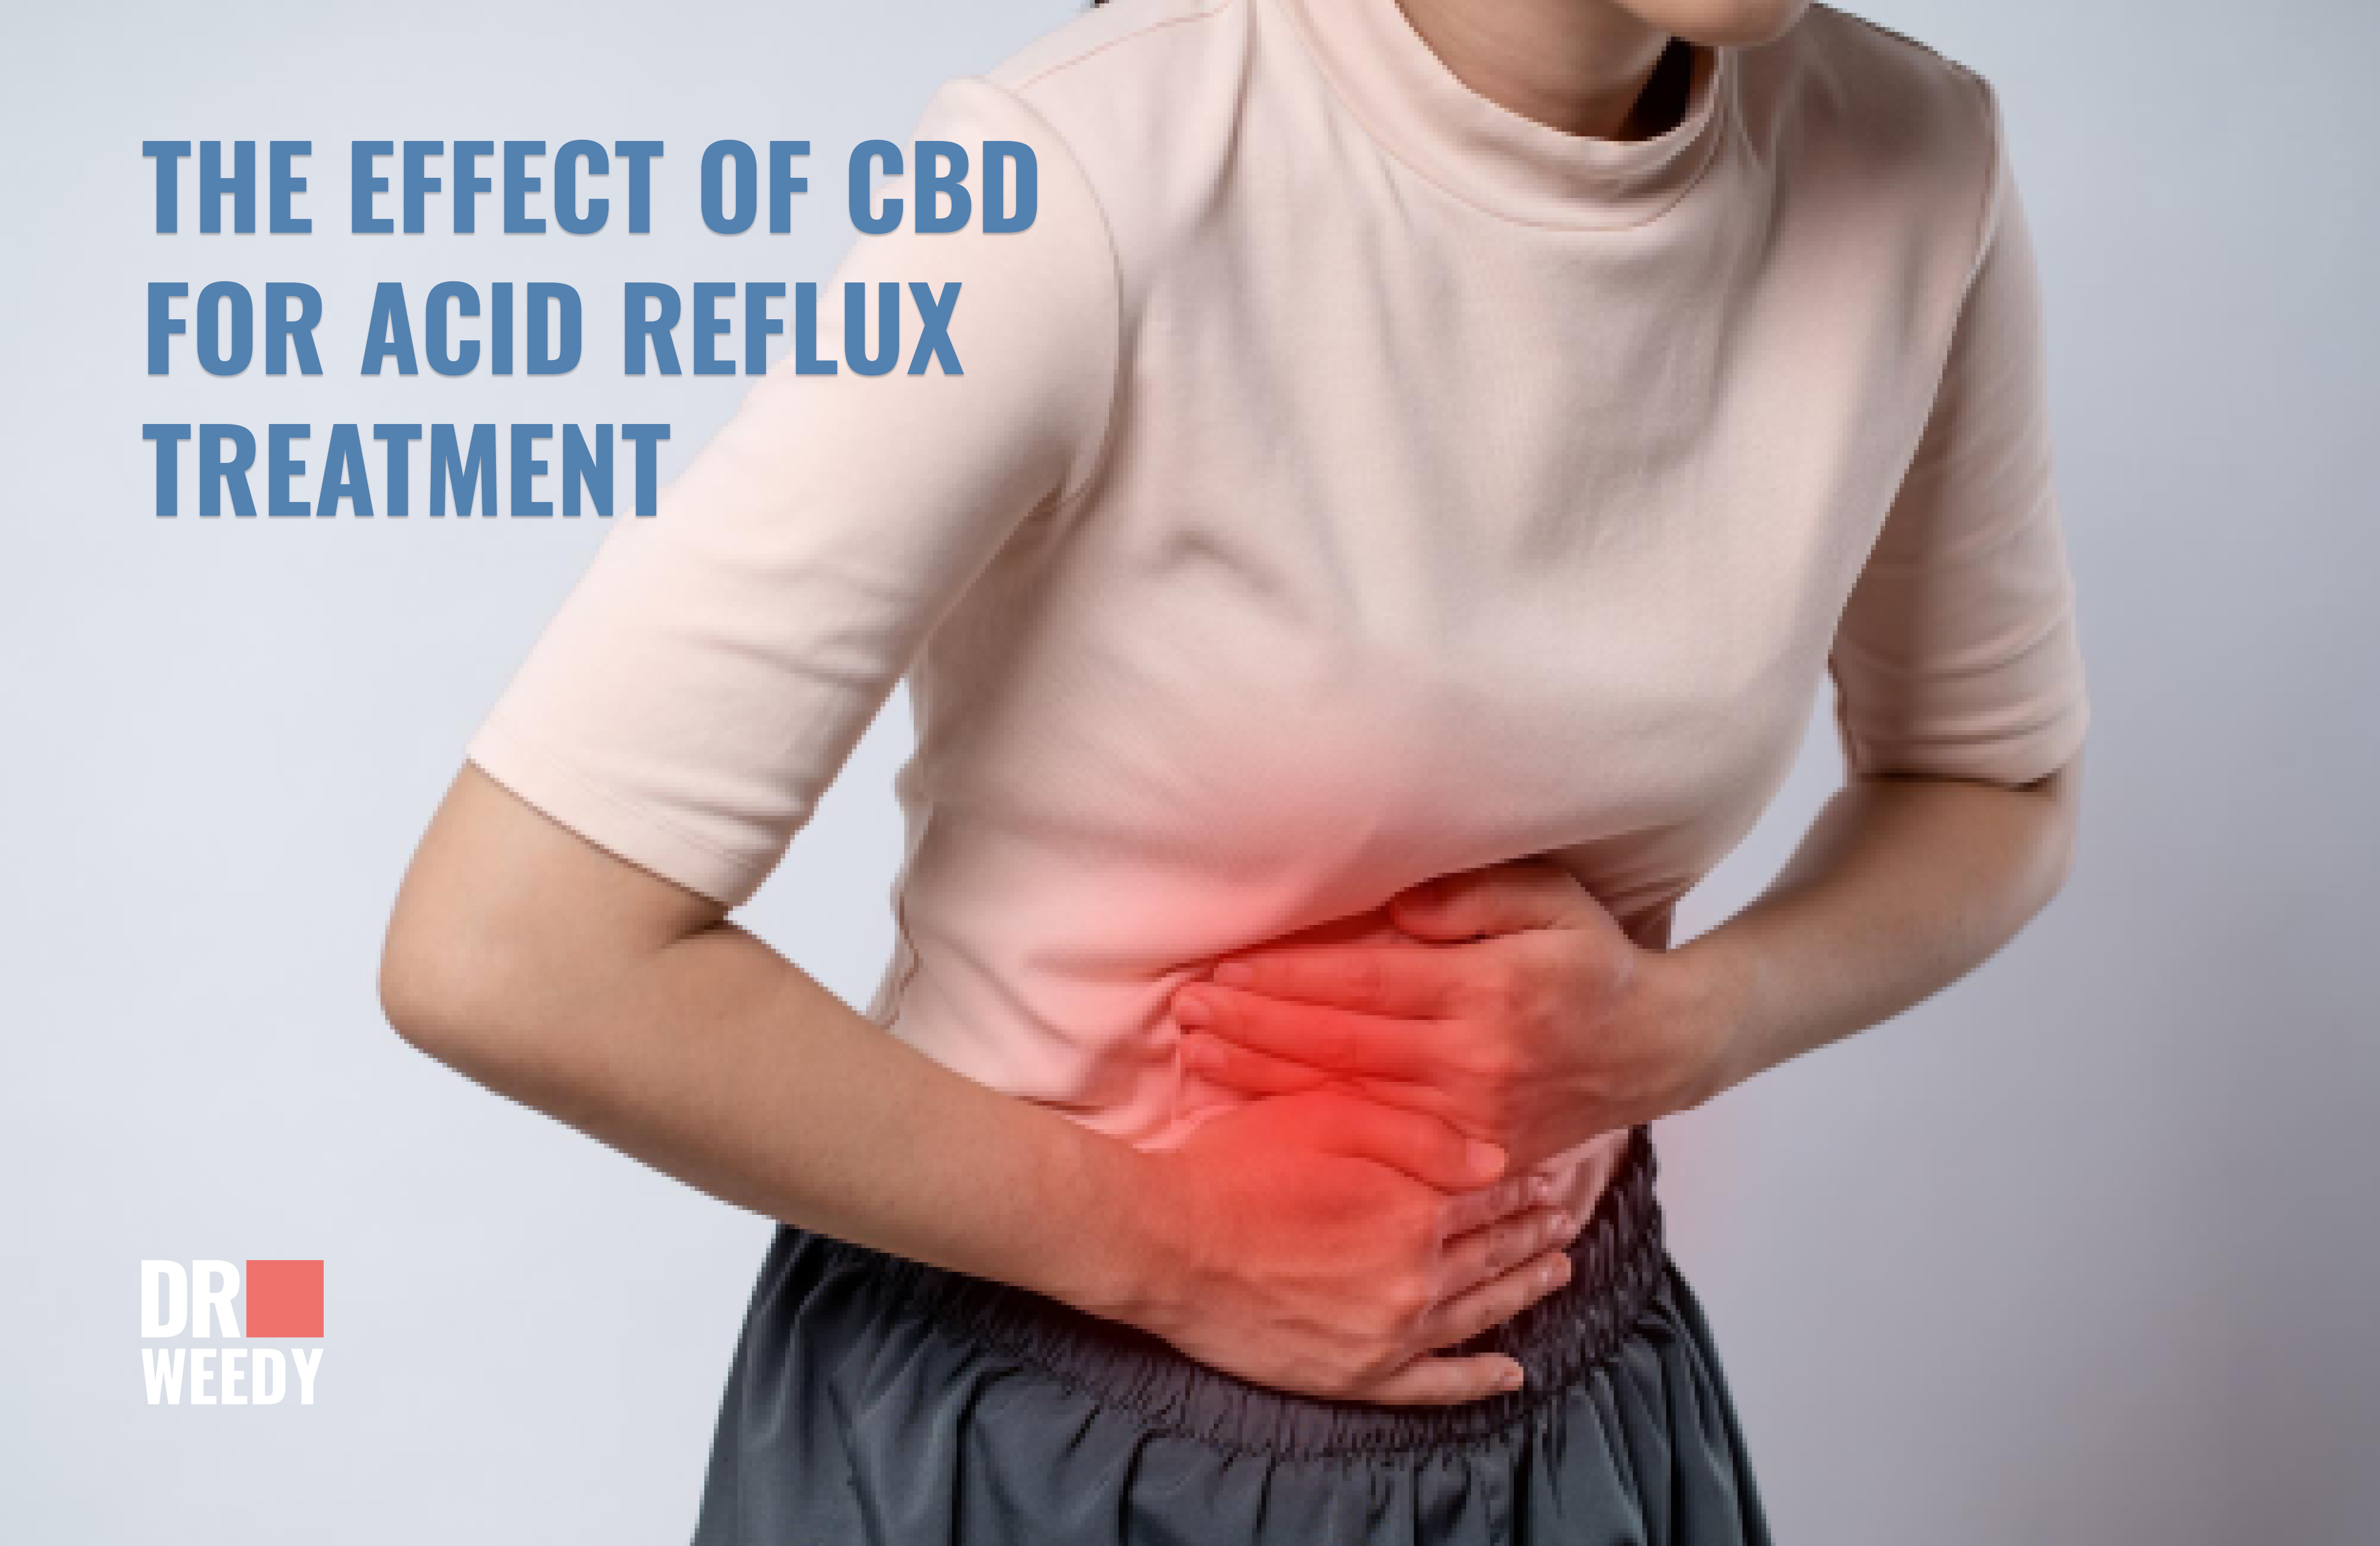 The Effectiveness of CBD in Treating Acid Reflux